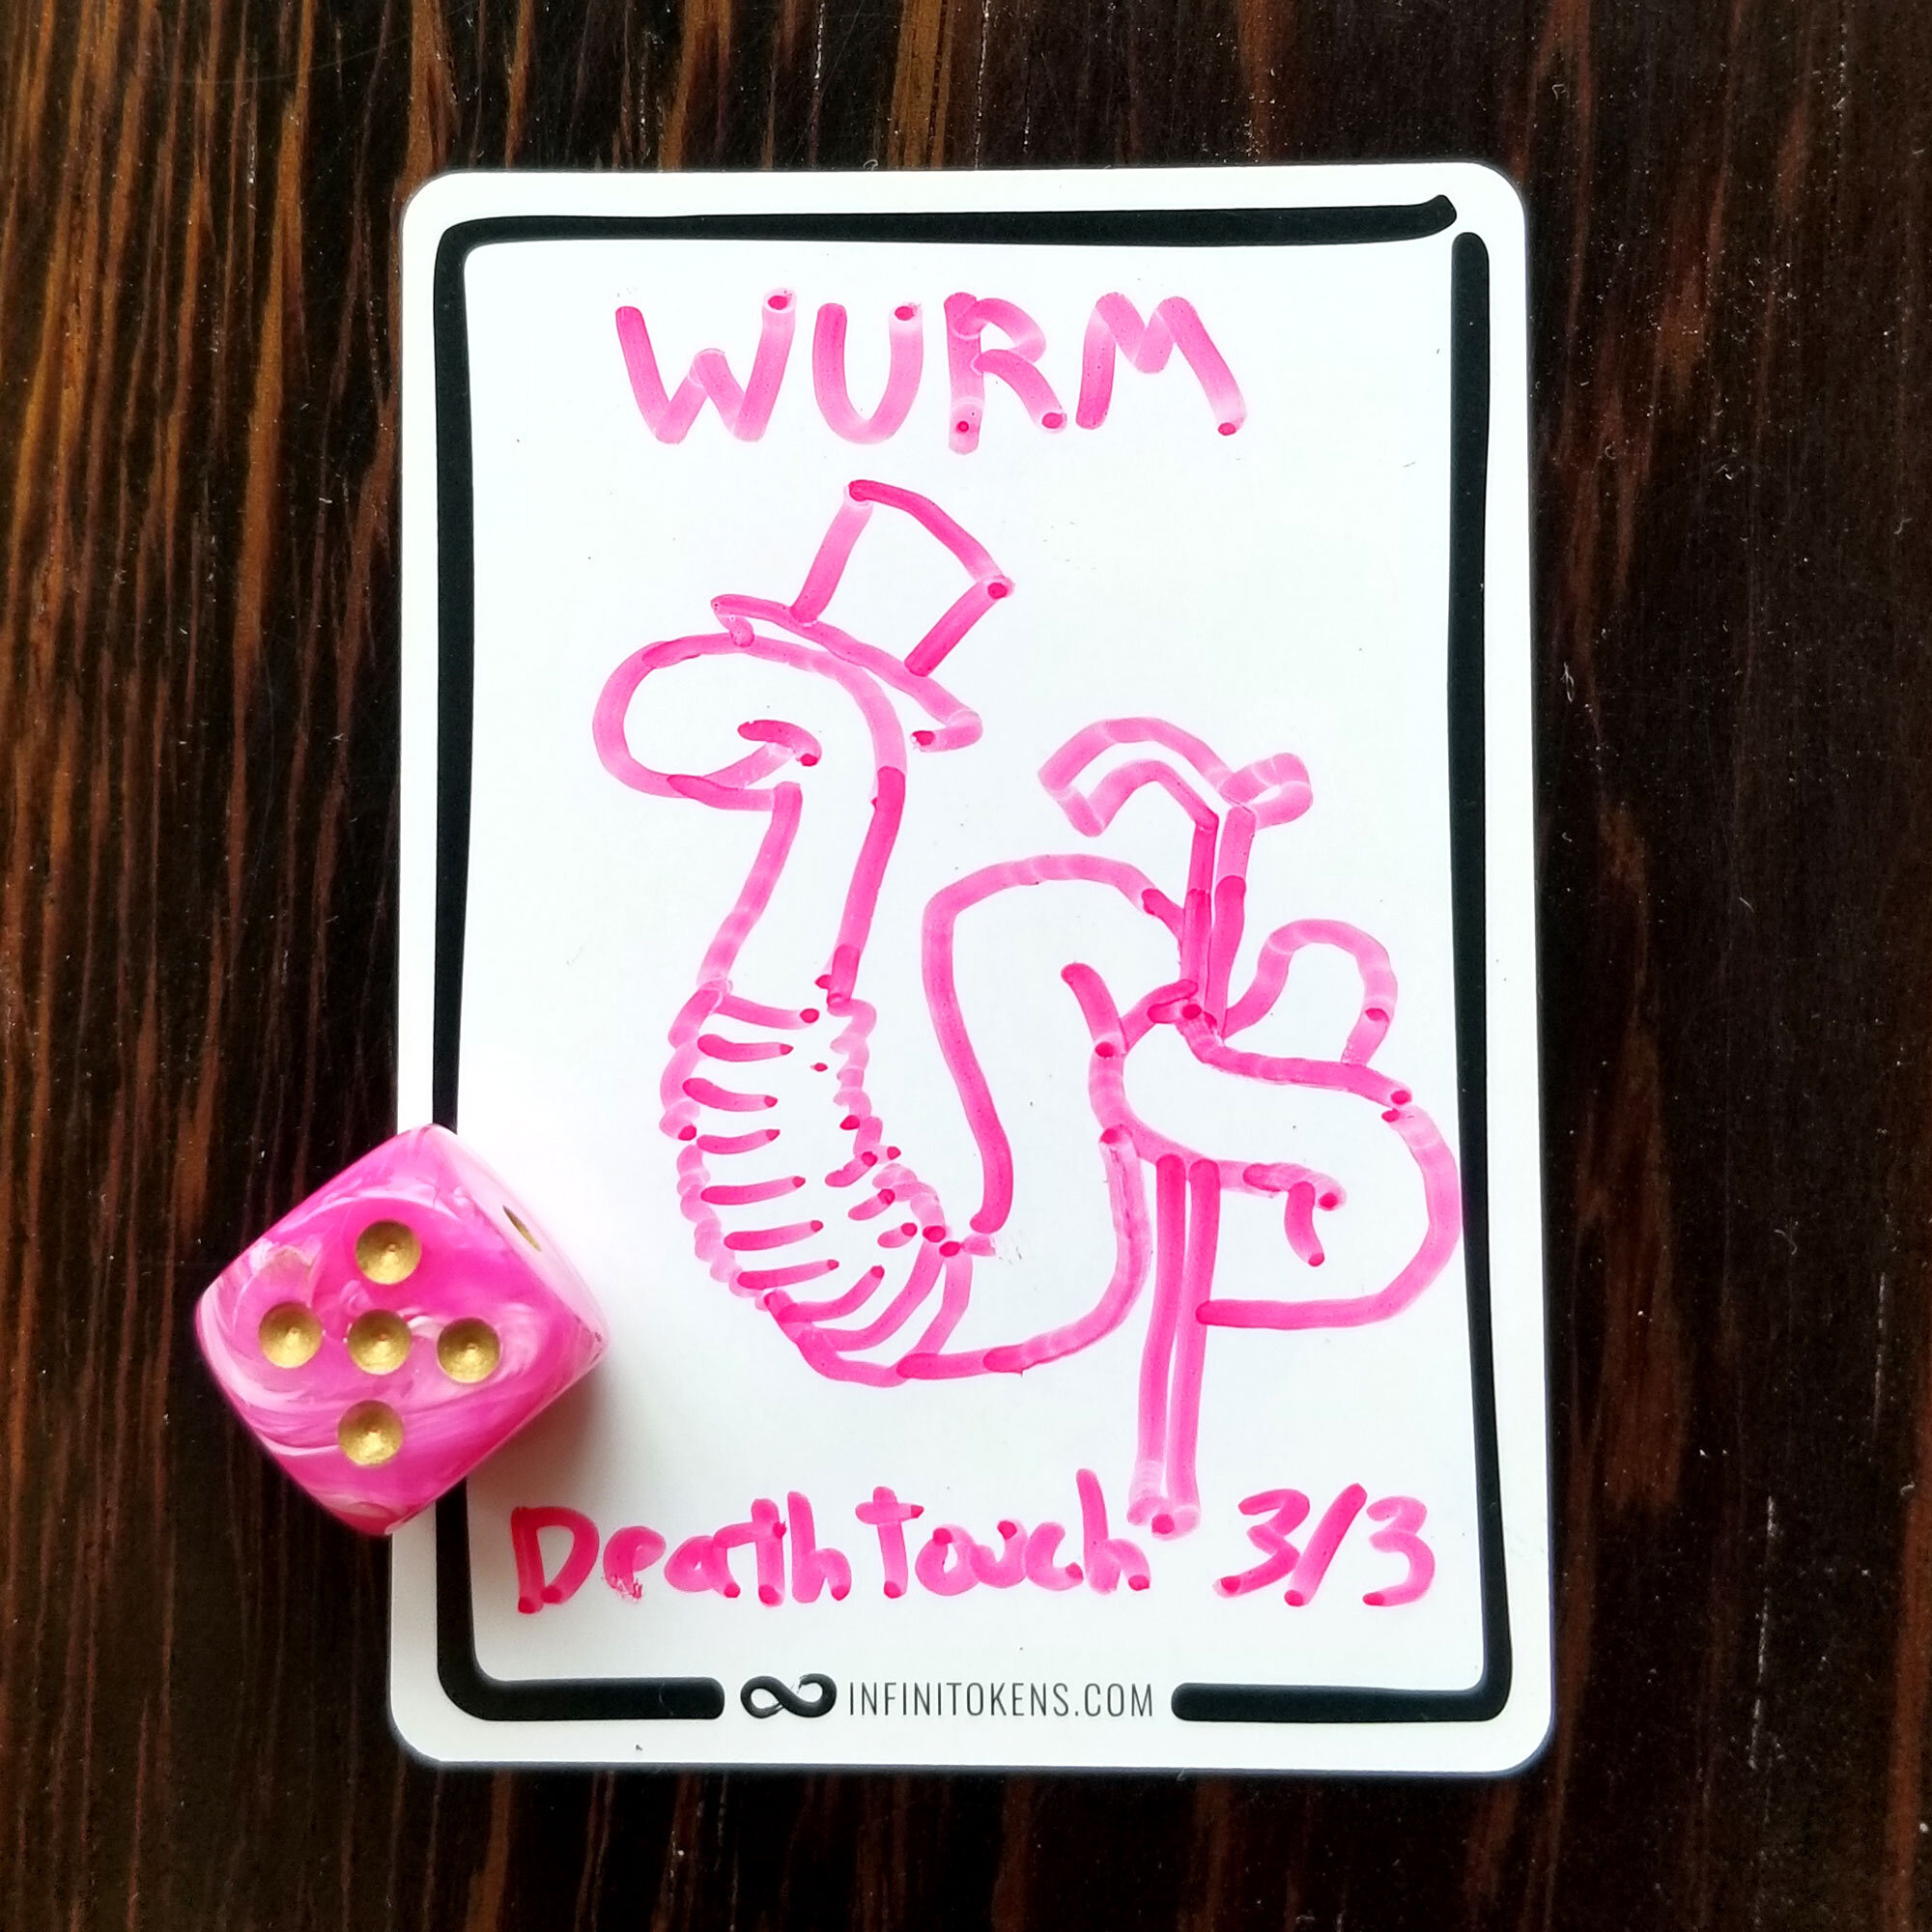 Day 5 - Wurm